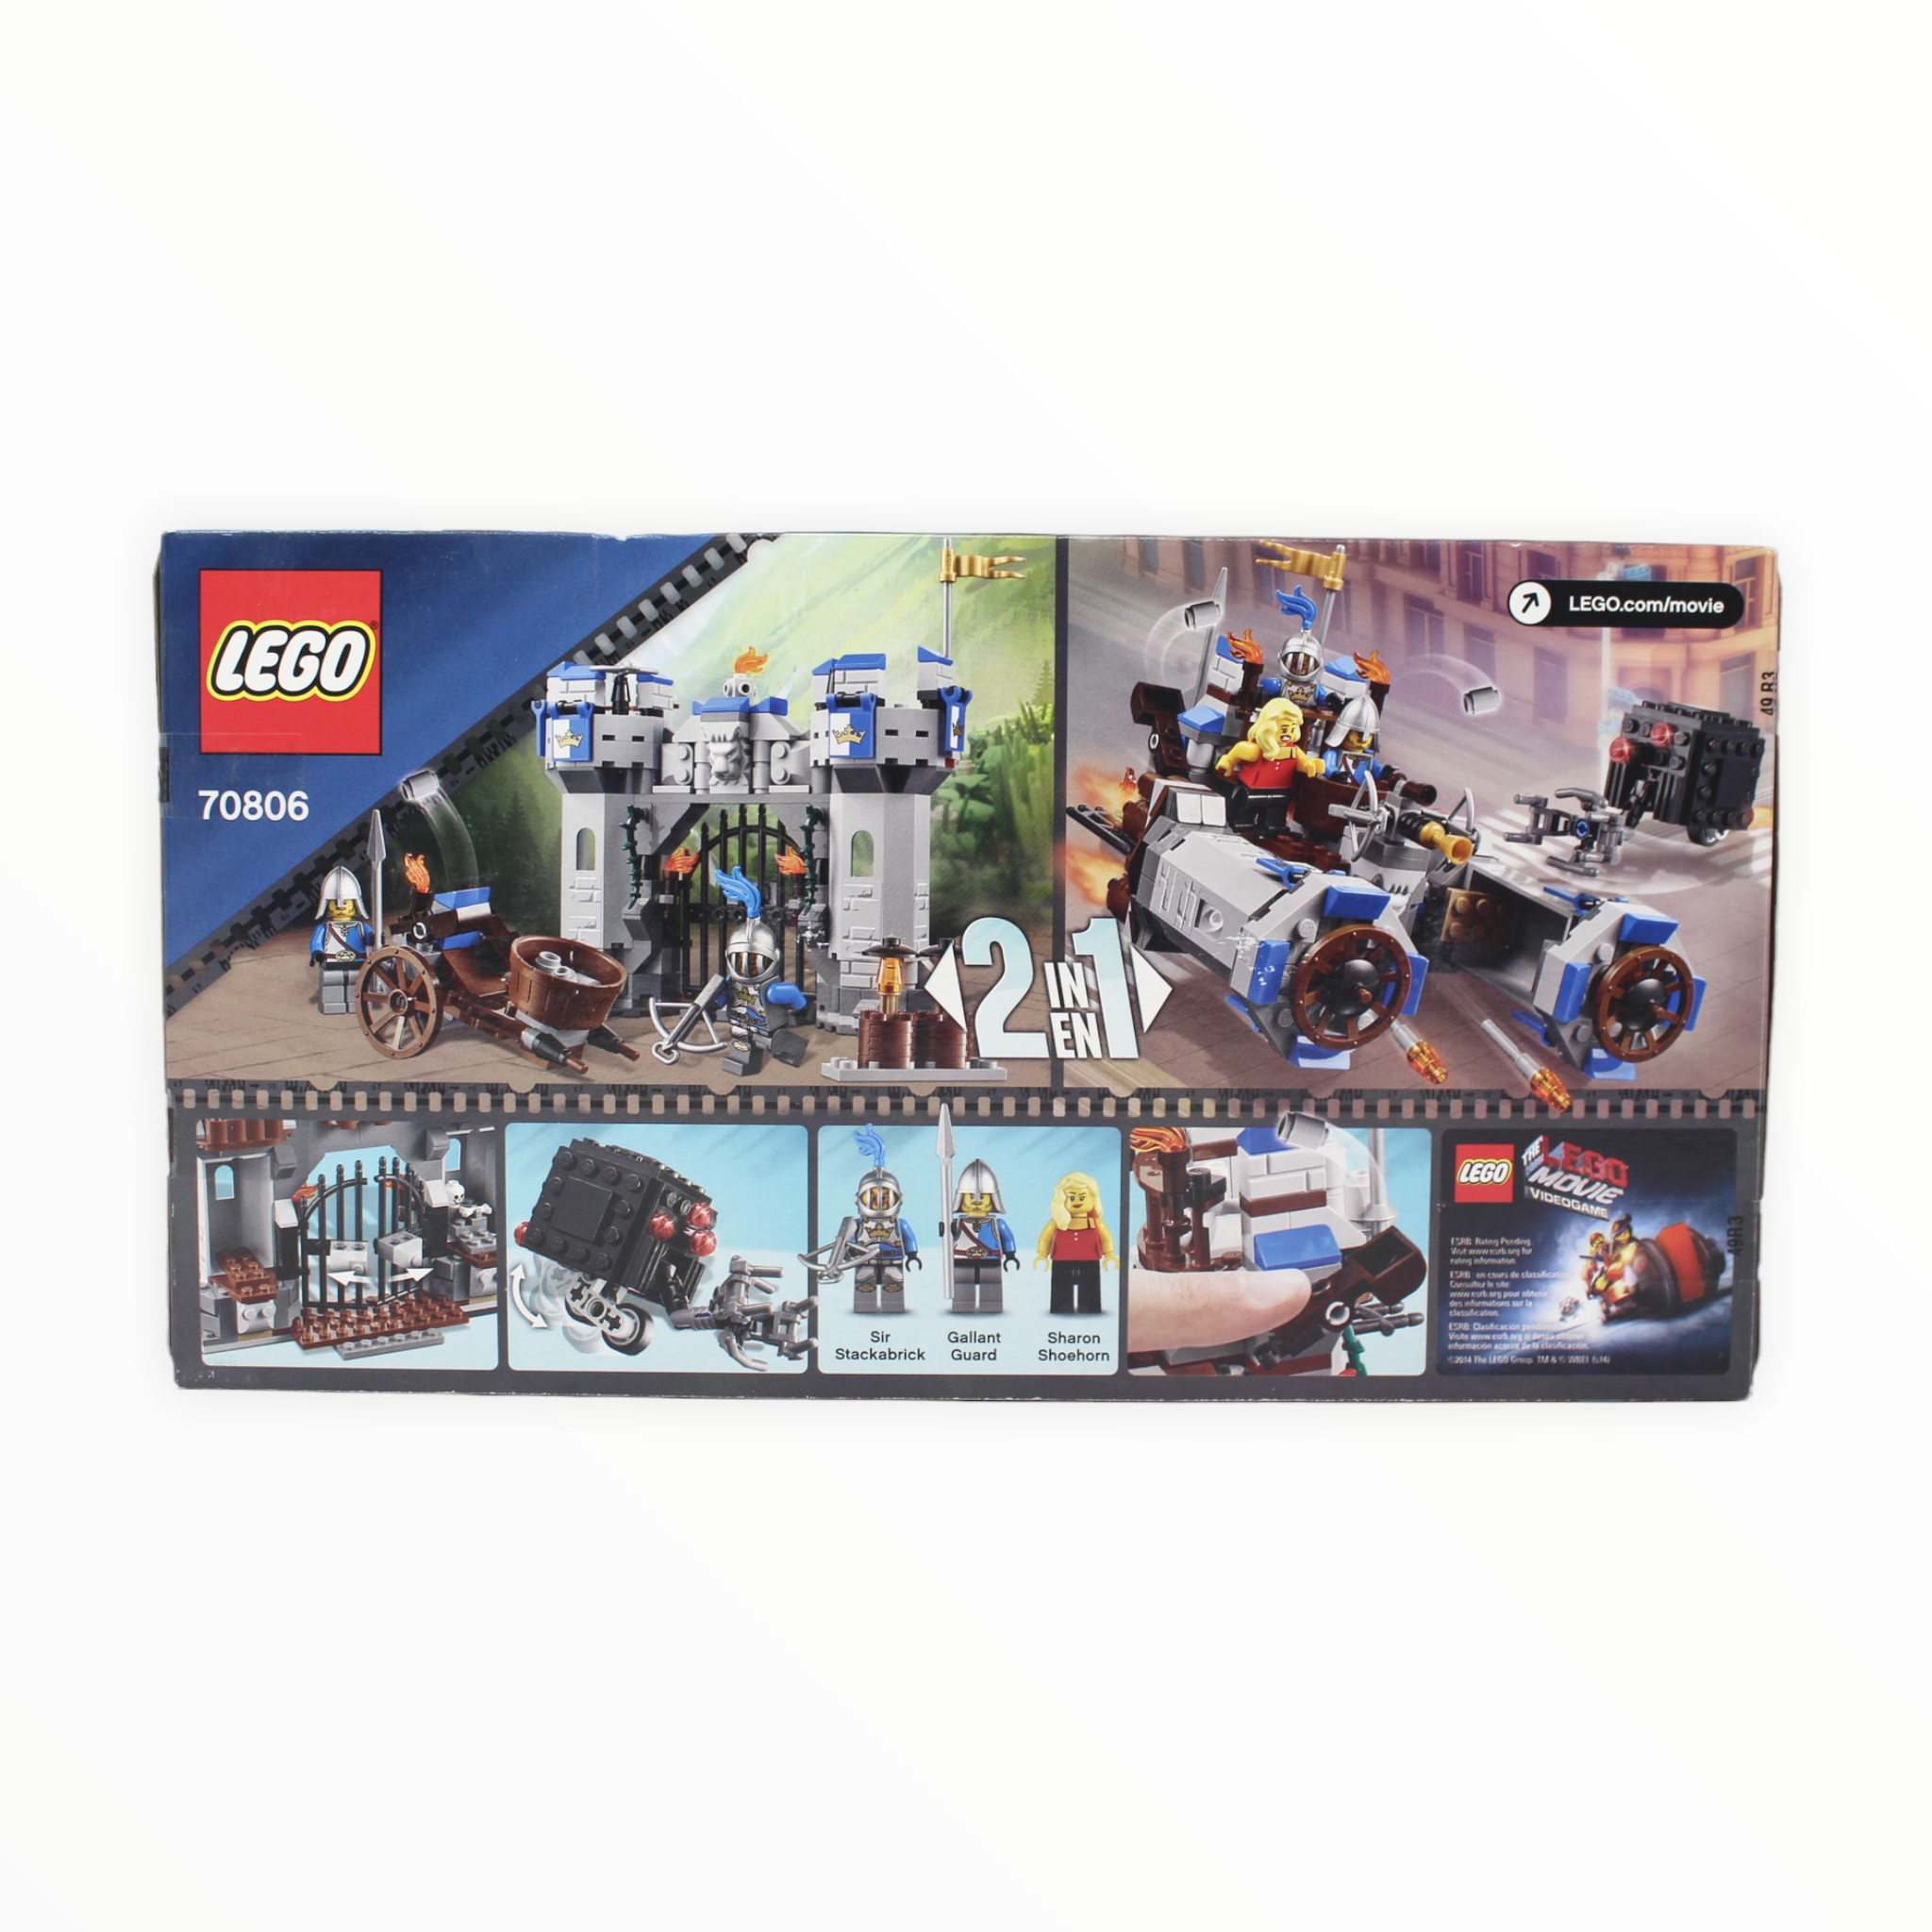 Retired Set 70806 The LEGO Movie Castle Cavalry